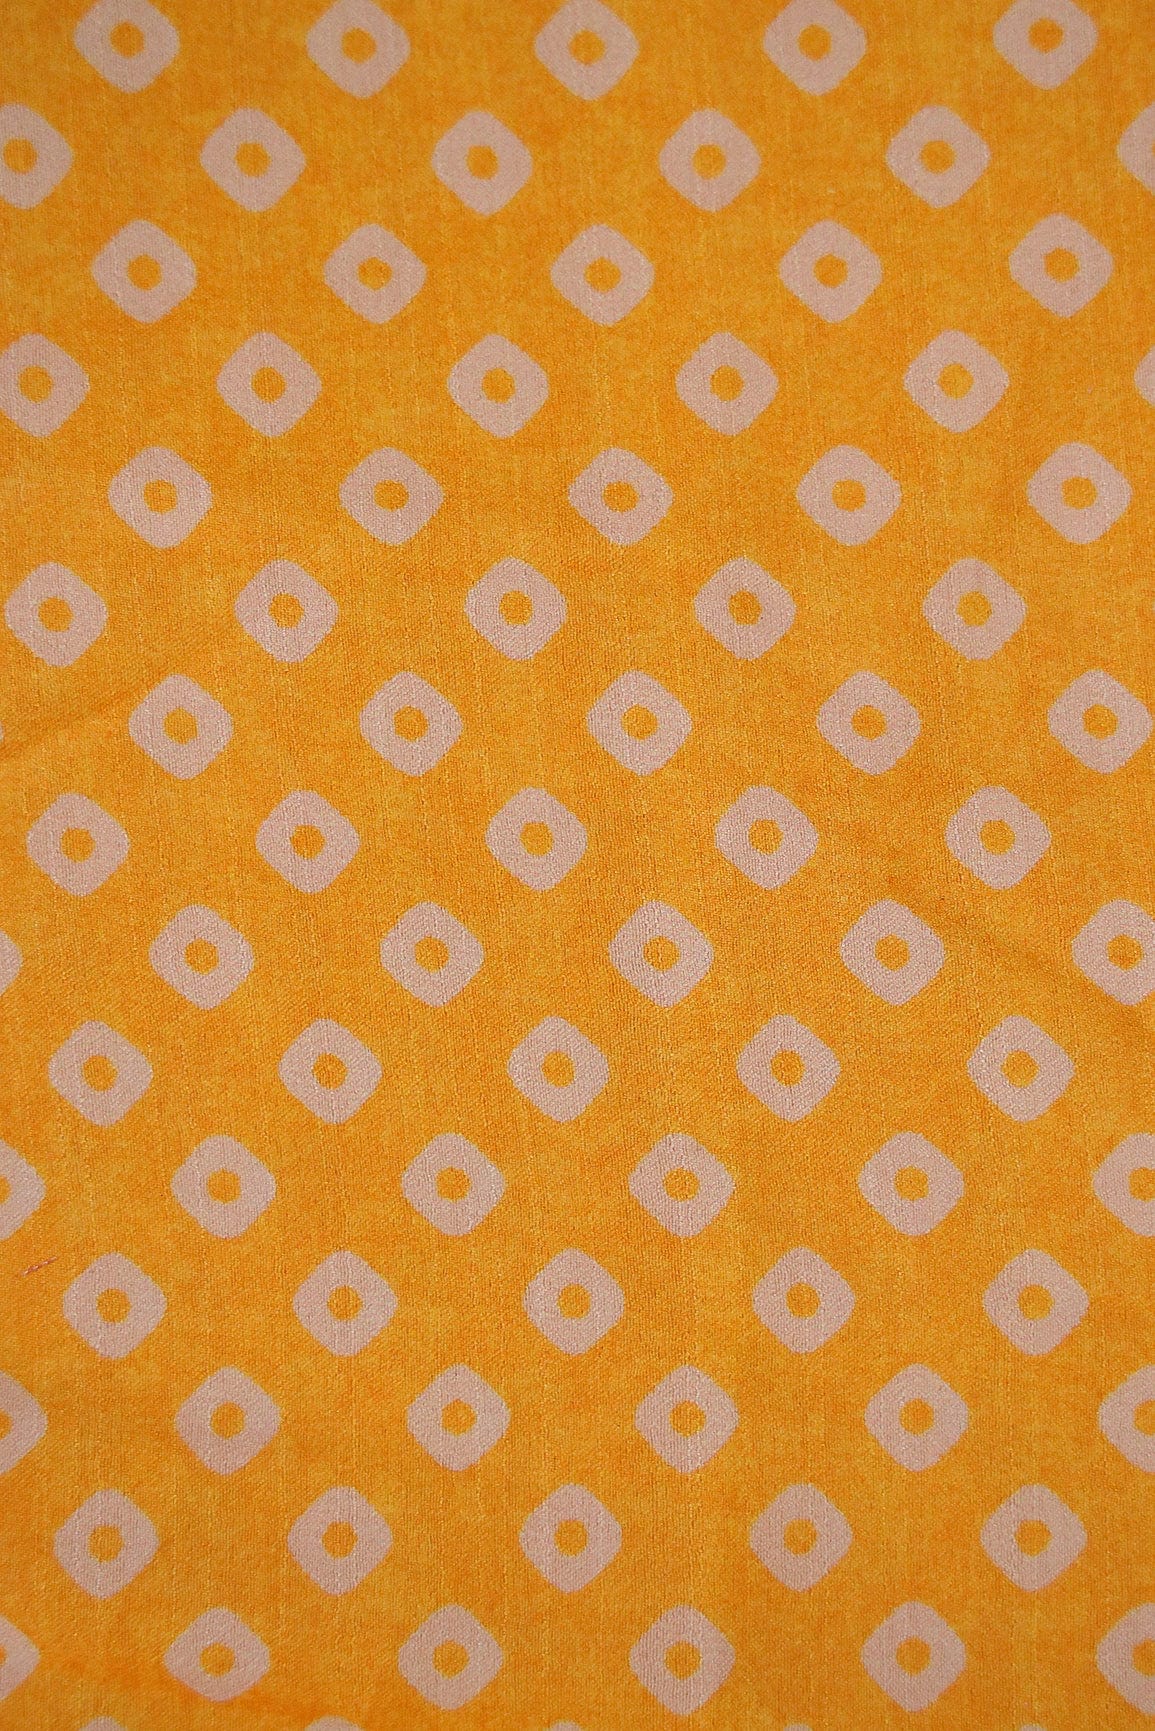 doeraa Prints Yellow Motif Digital Print on Tussar Satin Fabric